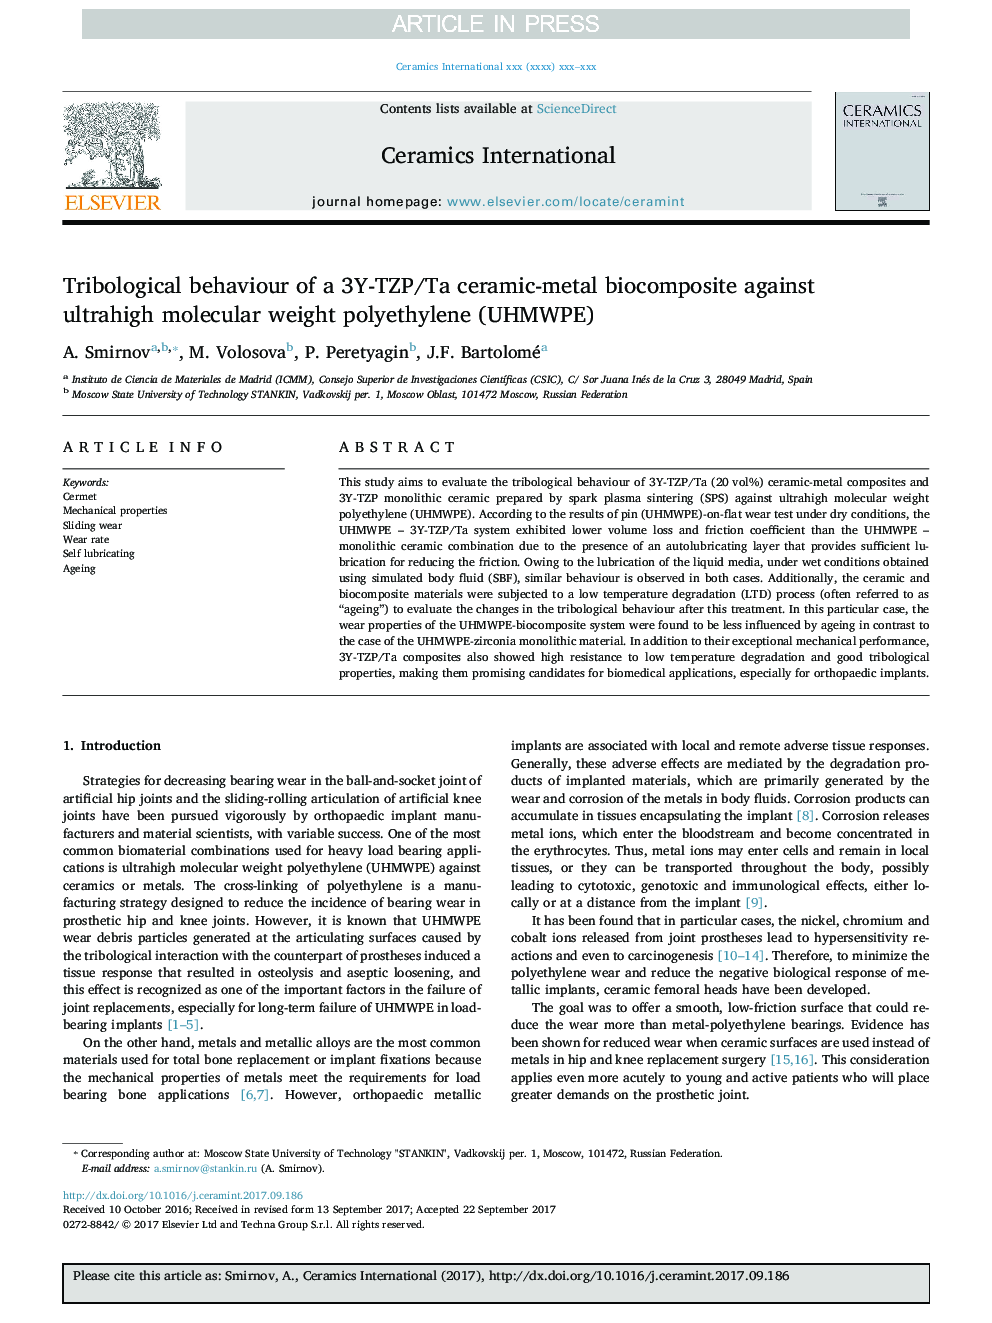 Tribological behaviour of a 3Y-TZP/Ta ceramic-metal biocomposite against ultrahigh molecular weight polyethylene (UHMWPE)